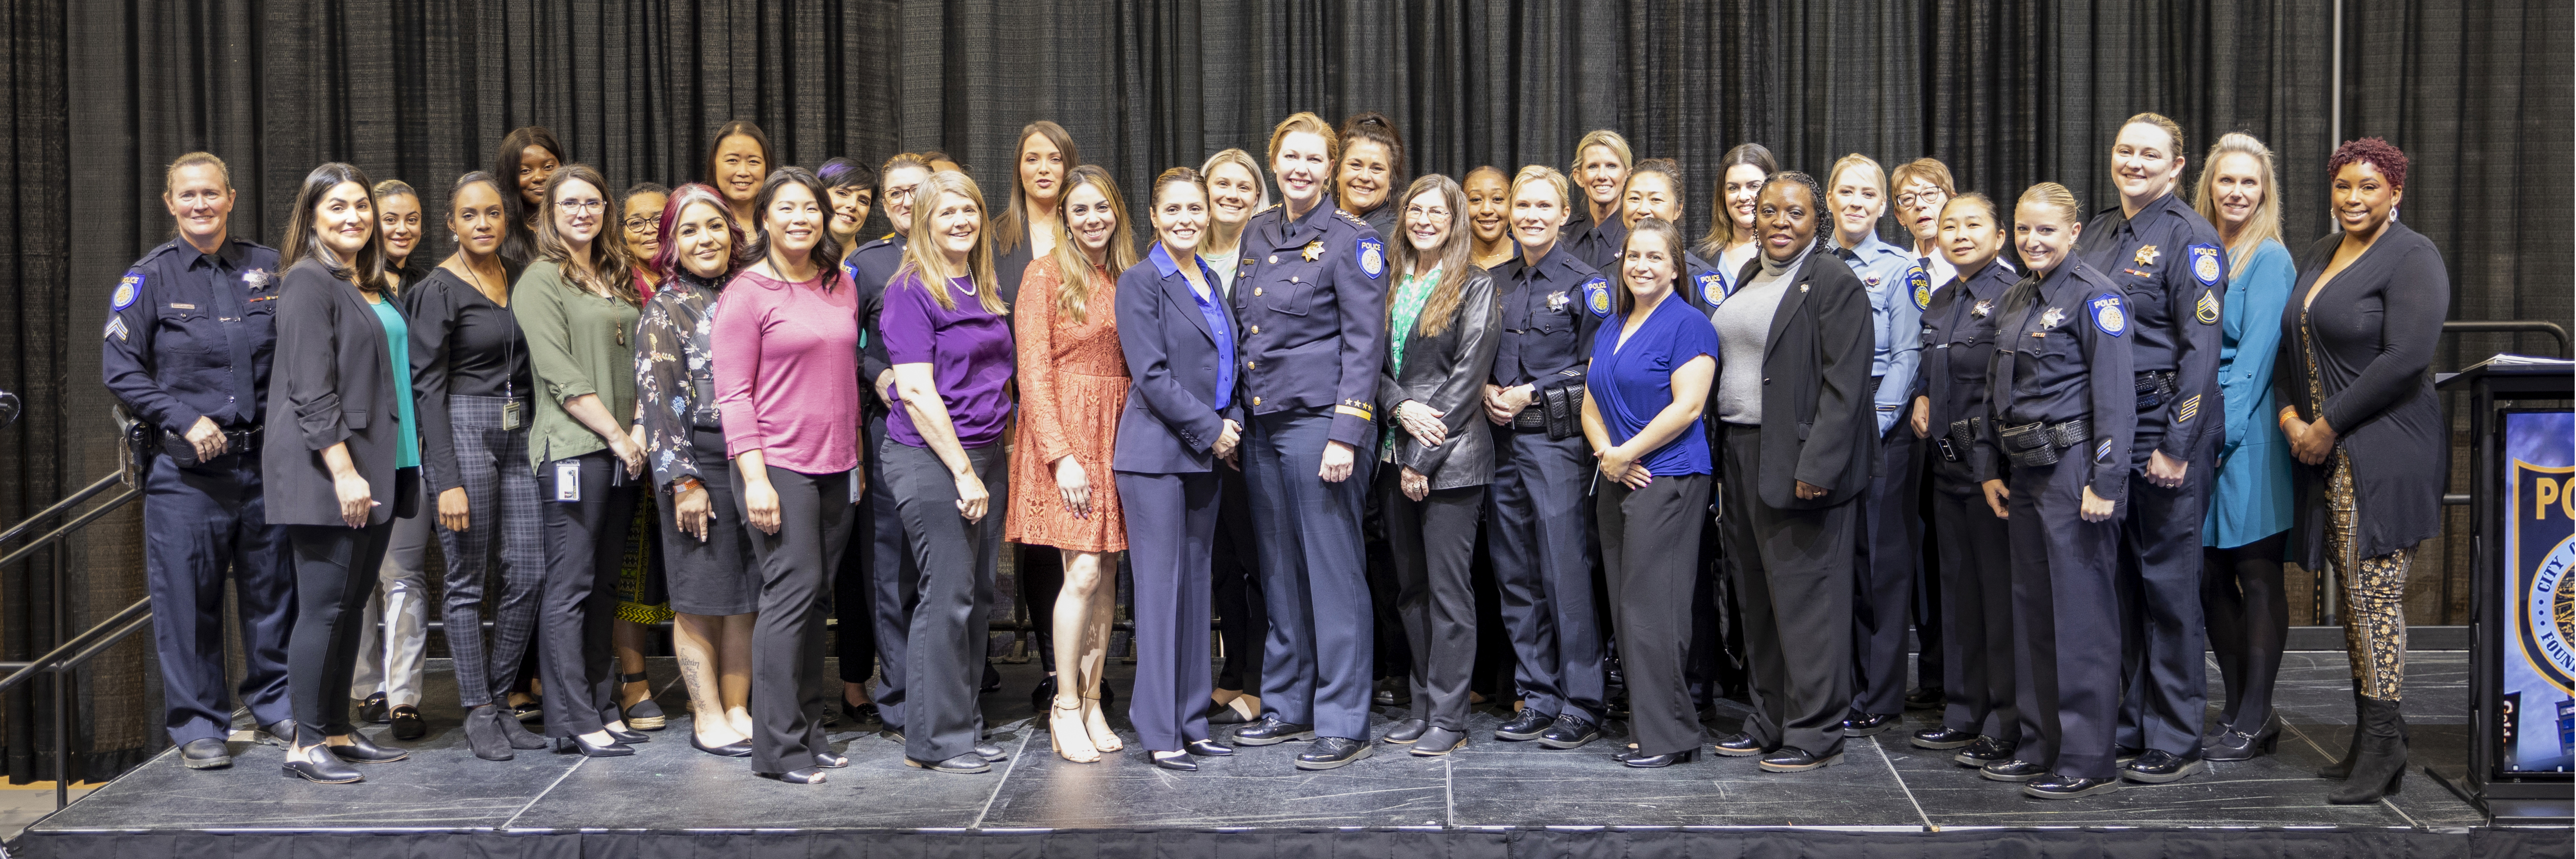 Sacramento Police Department Women in Policing Photo